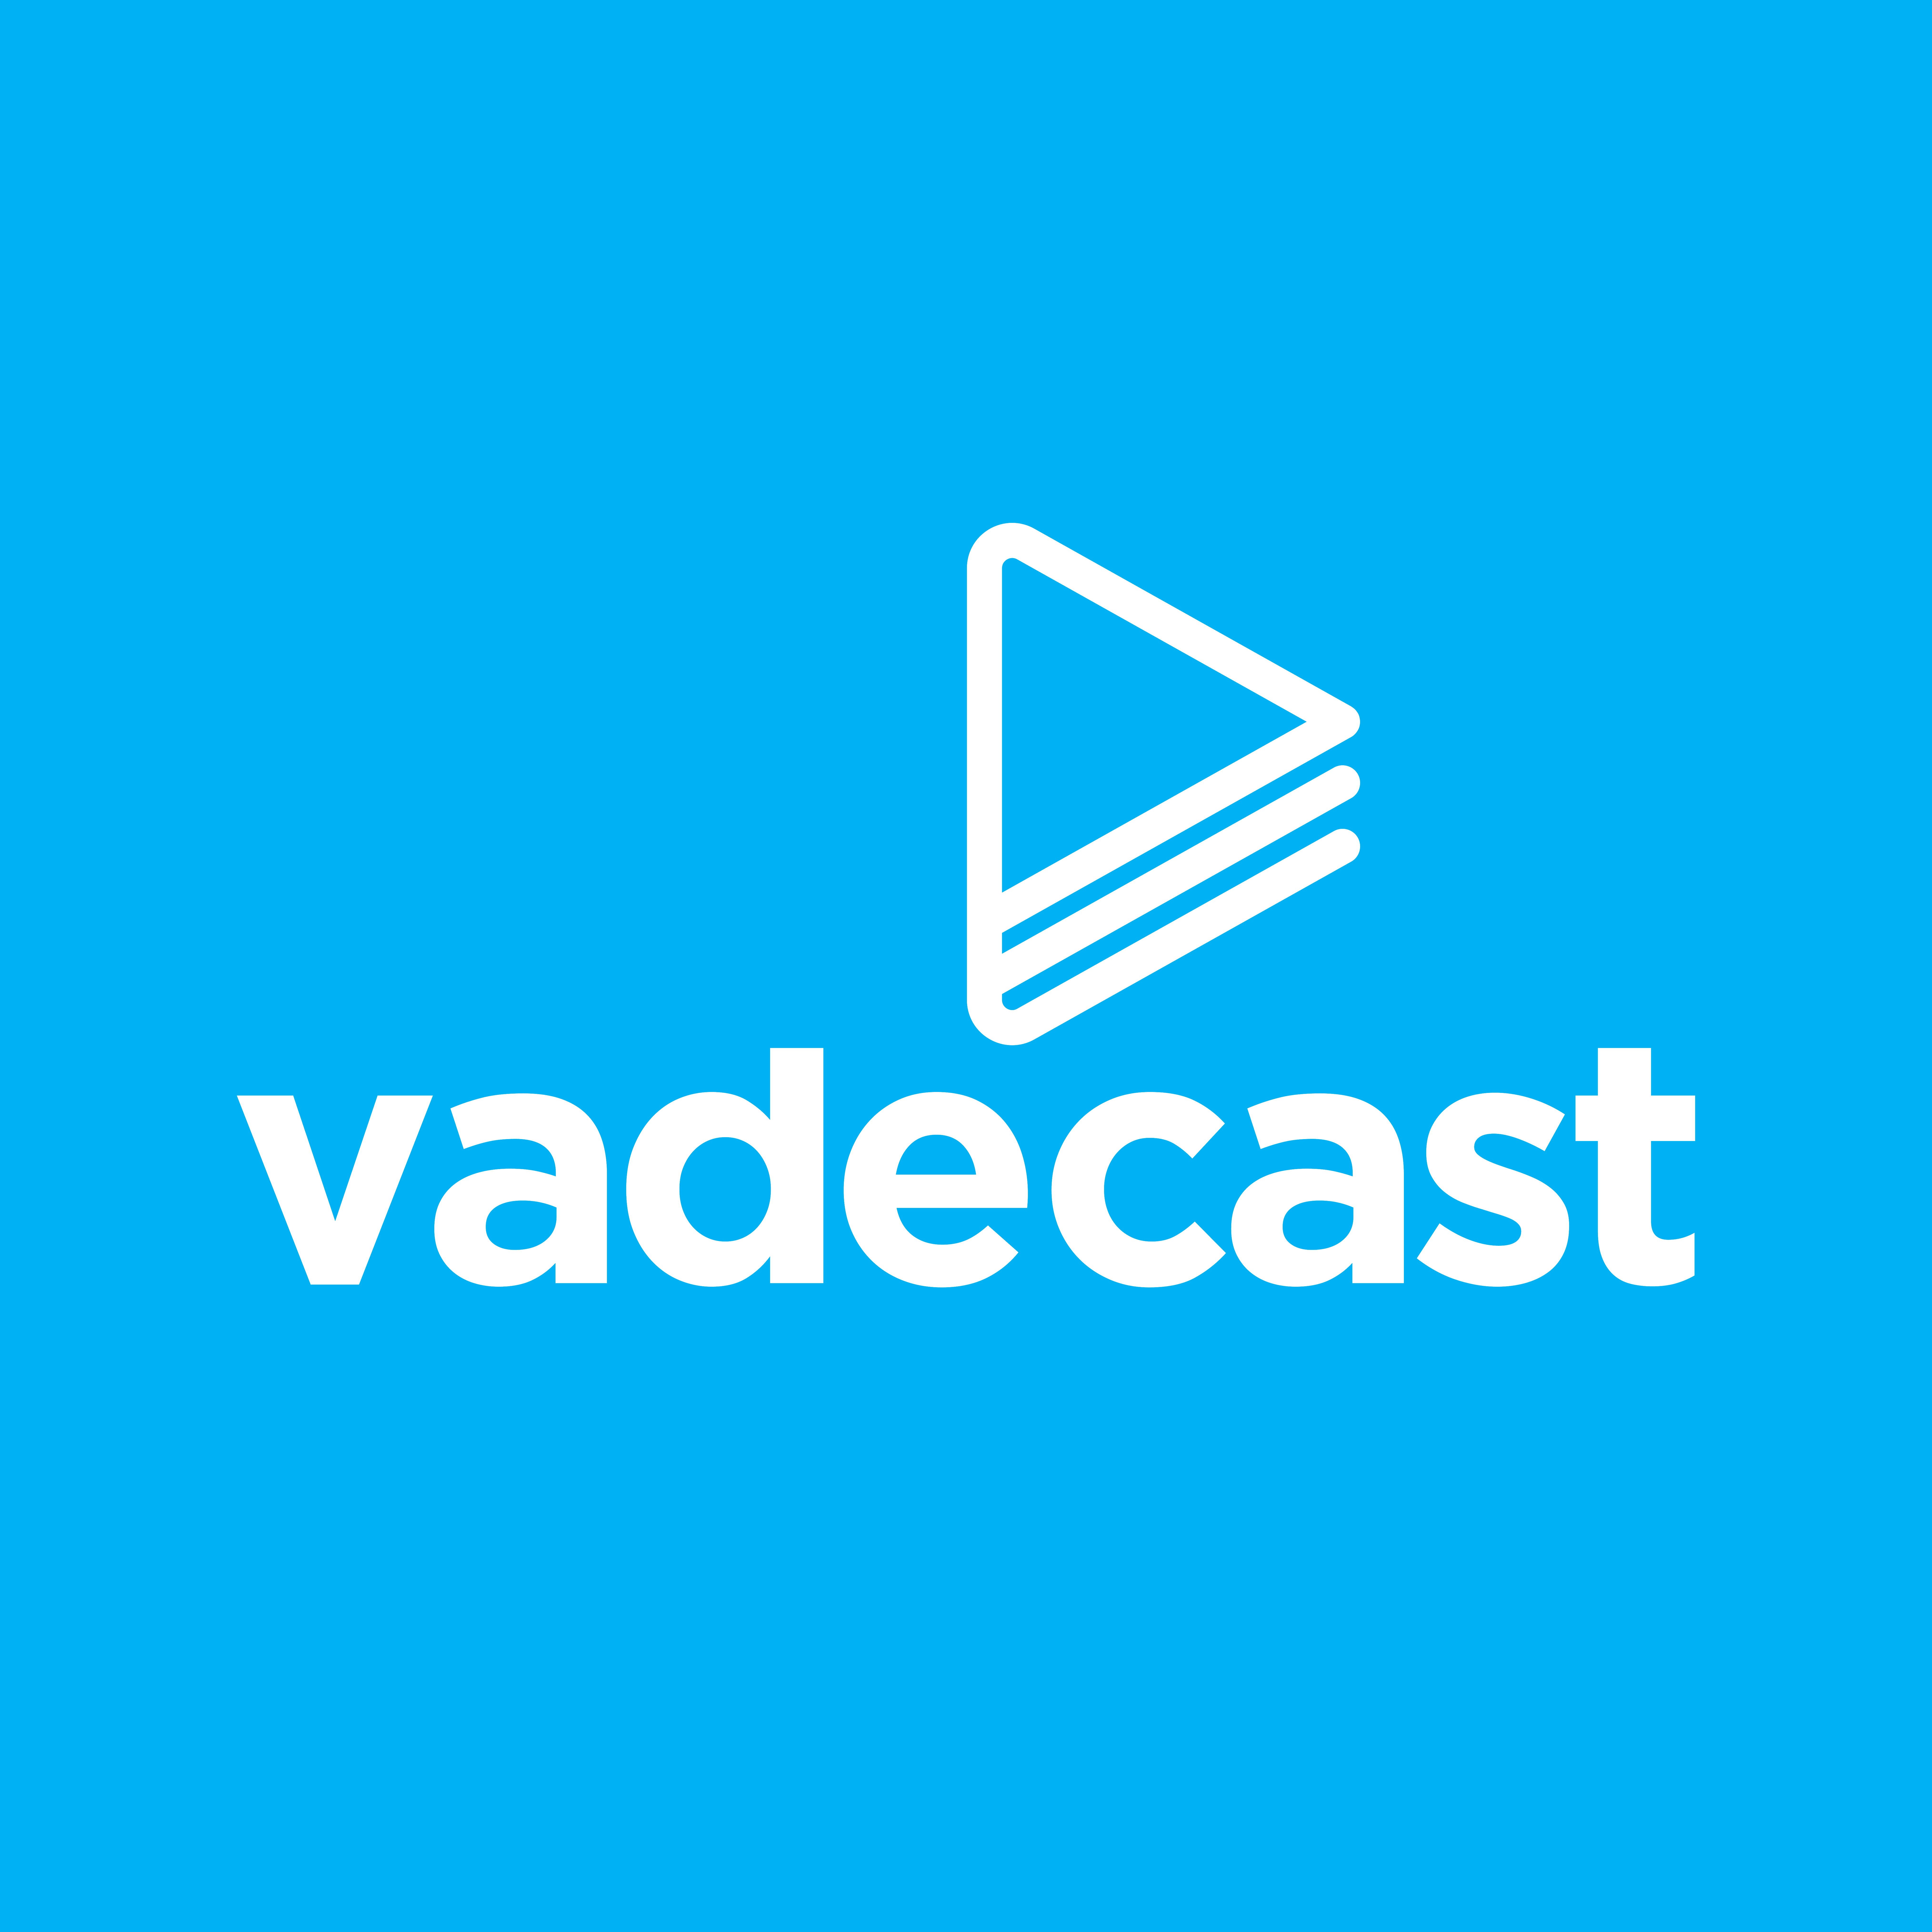 Vadecast logo